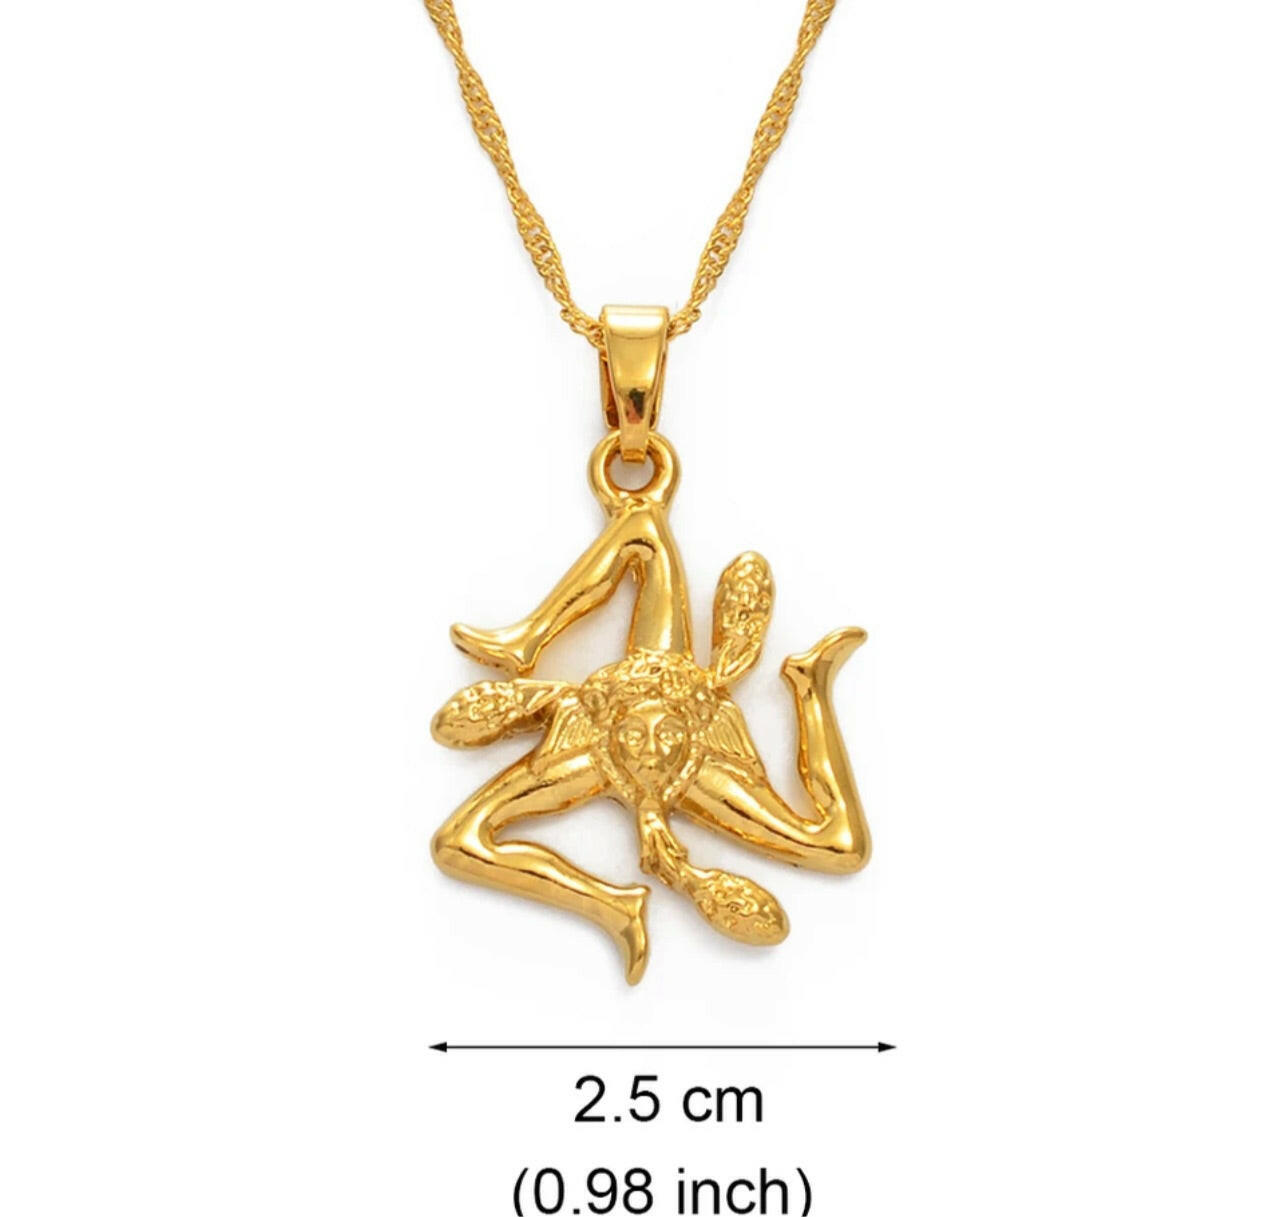 Gold Plated Sicilian Necklace - Sicily Necklace - Sicilia Necklace.